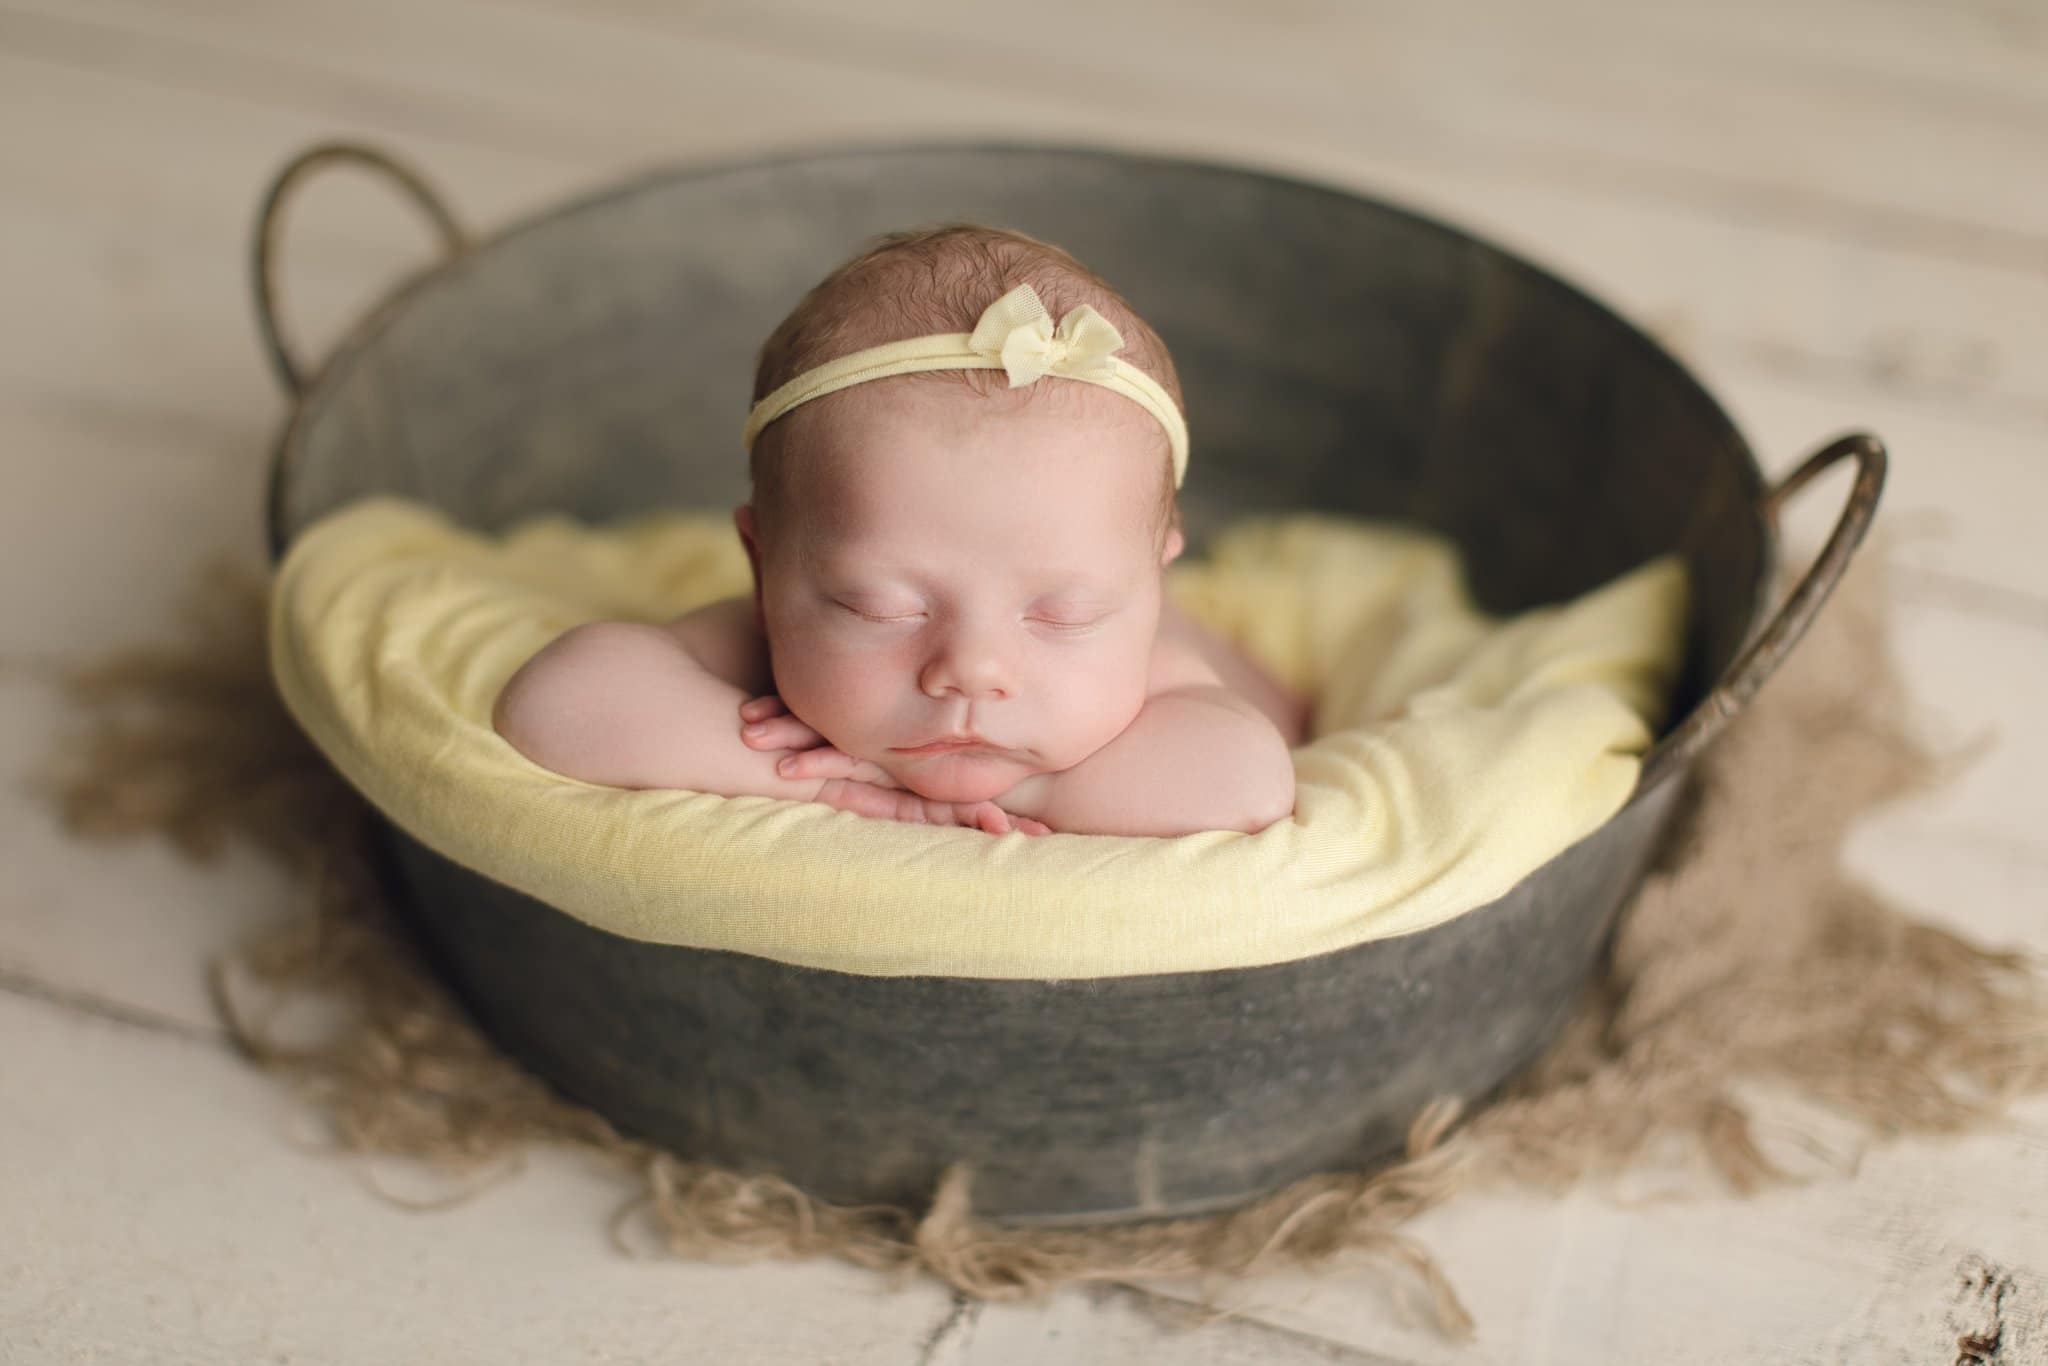 Custom Newborn Portraiture Jacksonville Fl newborn photo session. sleeping baby with simple headband yellow bow and wrap